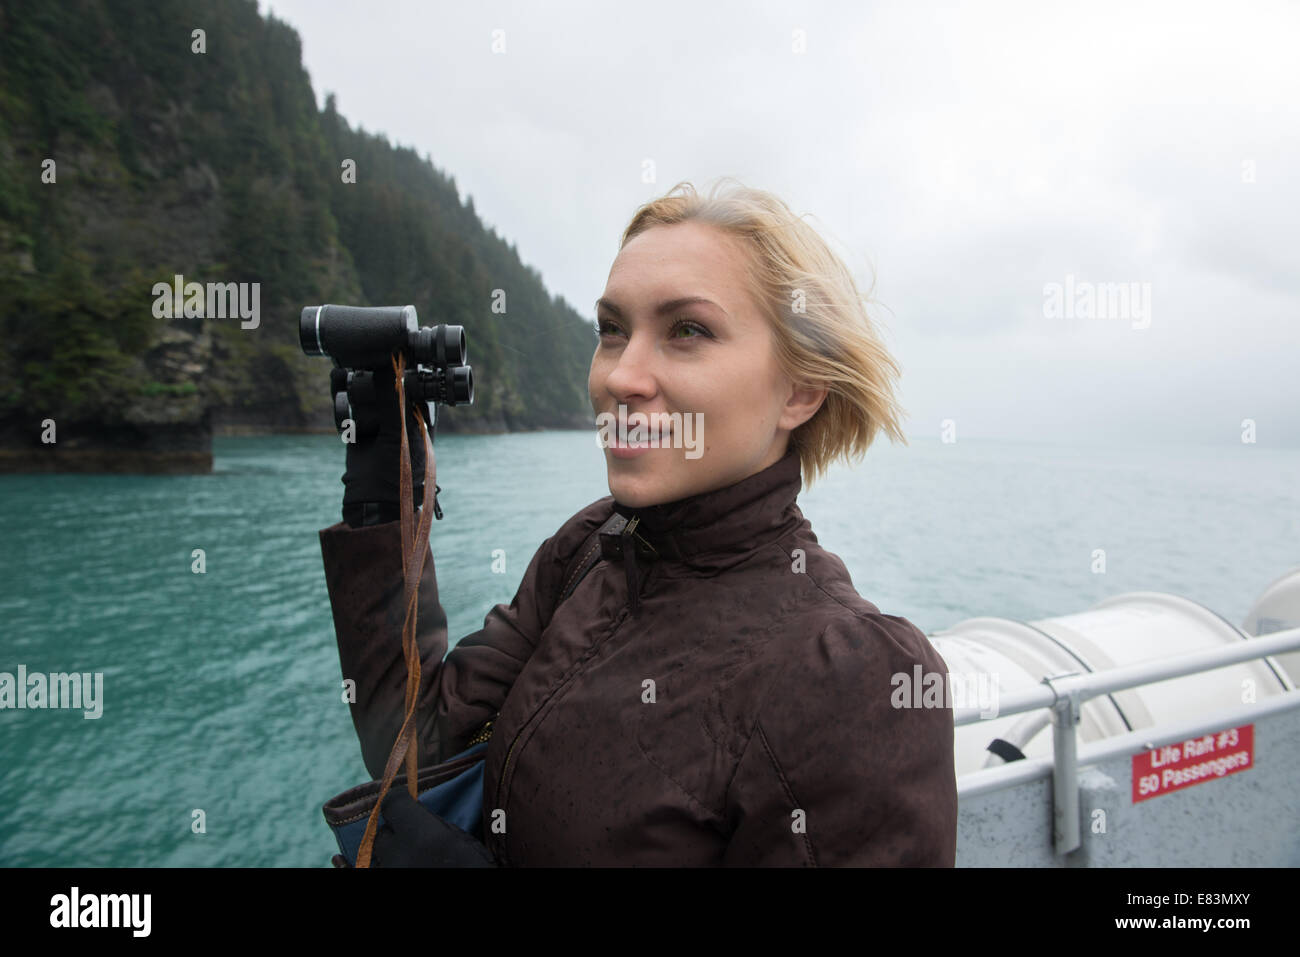 Frau mit dem Fernglas, Tierbeobachtung auf der Resurrection Bay Alaska Kreuzfahrt Stockfoto